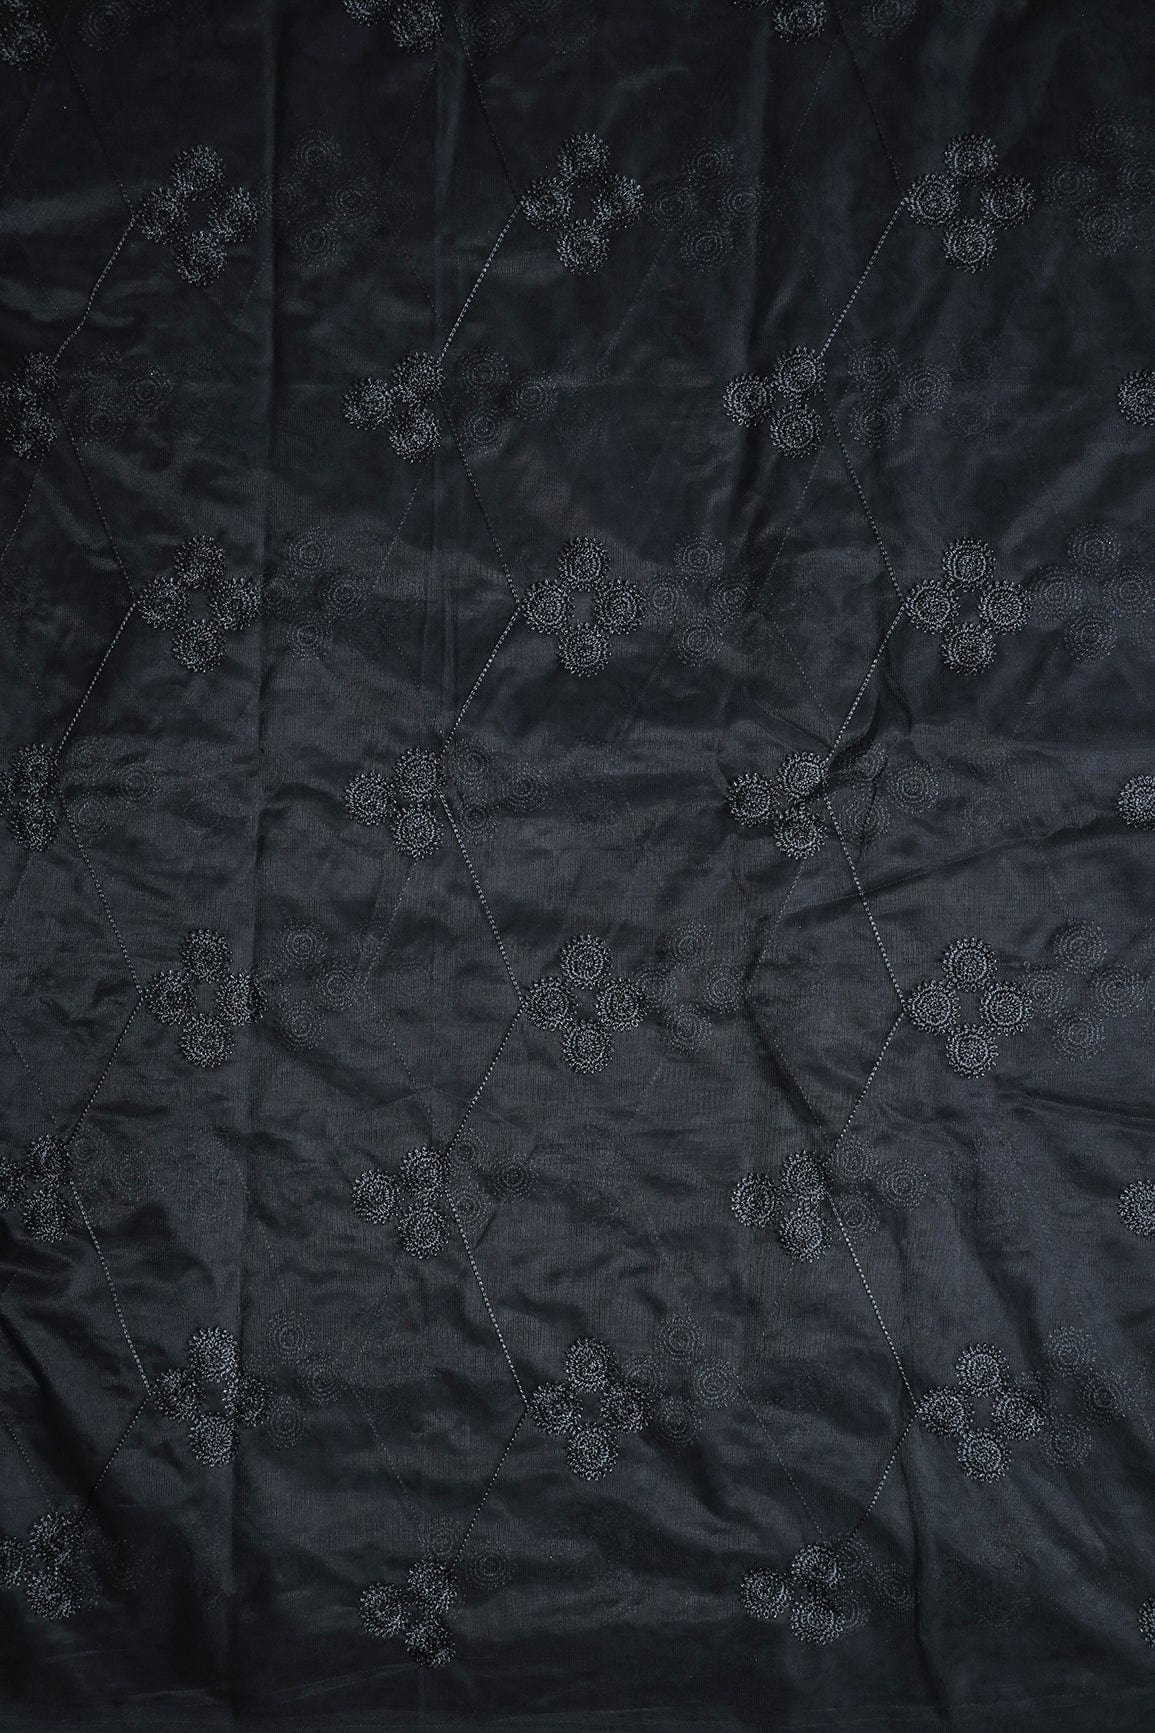 doeraa Embroidery Fabrics Black Color Thread Geometric Embroidery Work On Black Soft Net Fabric